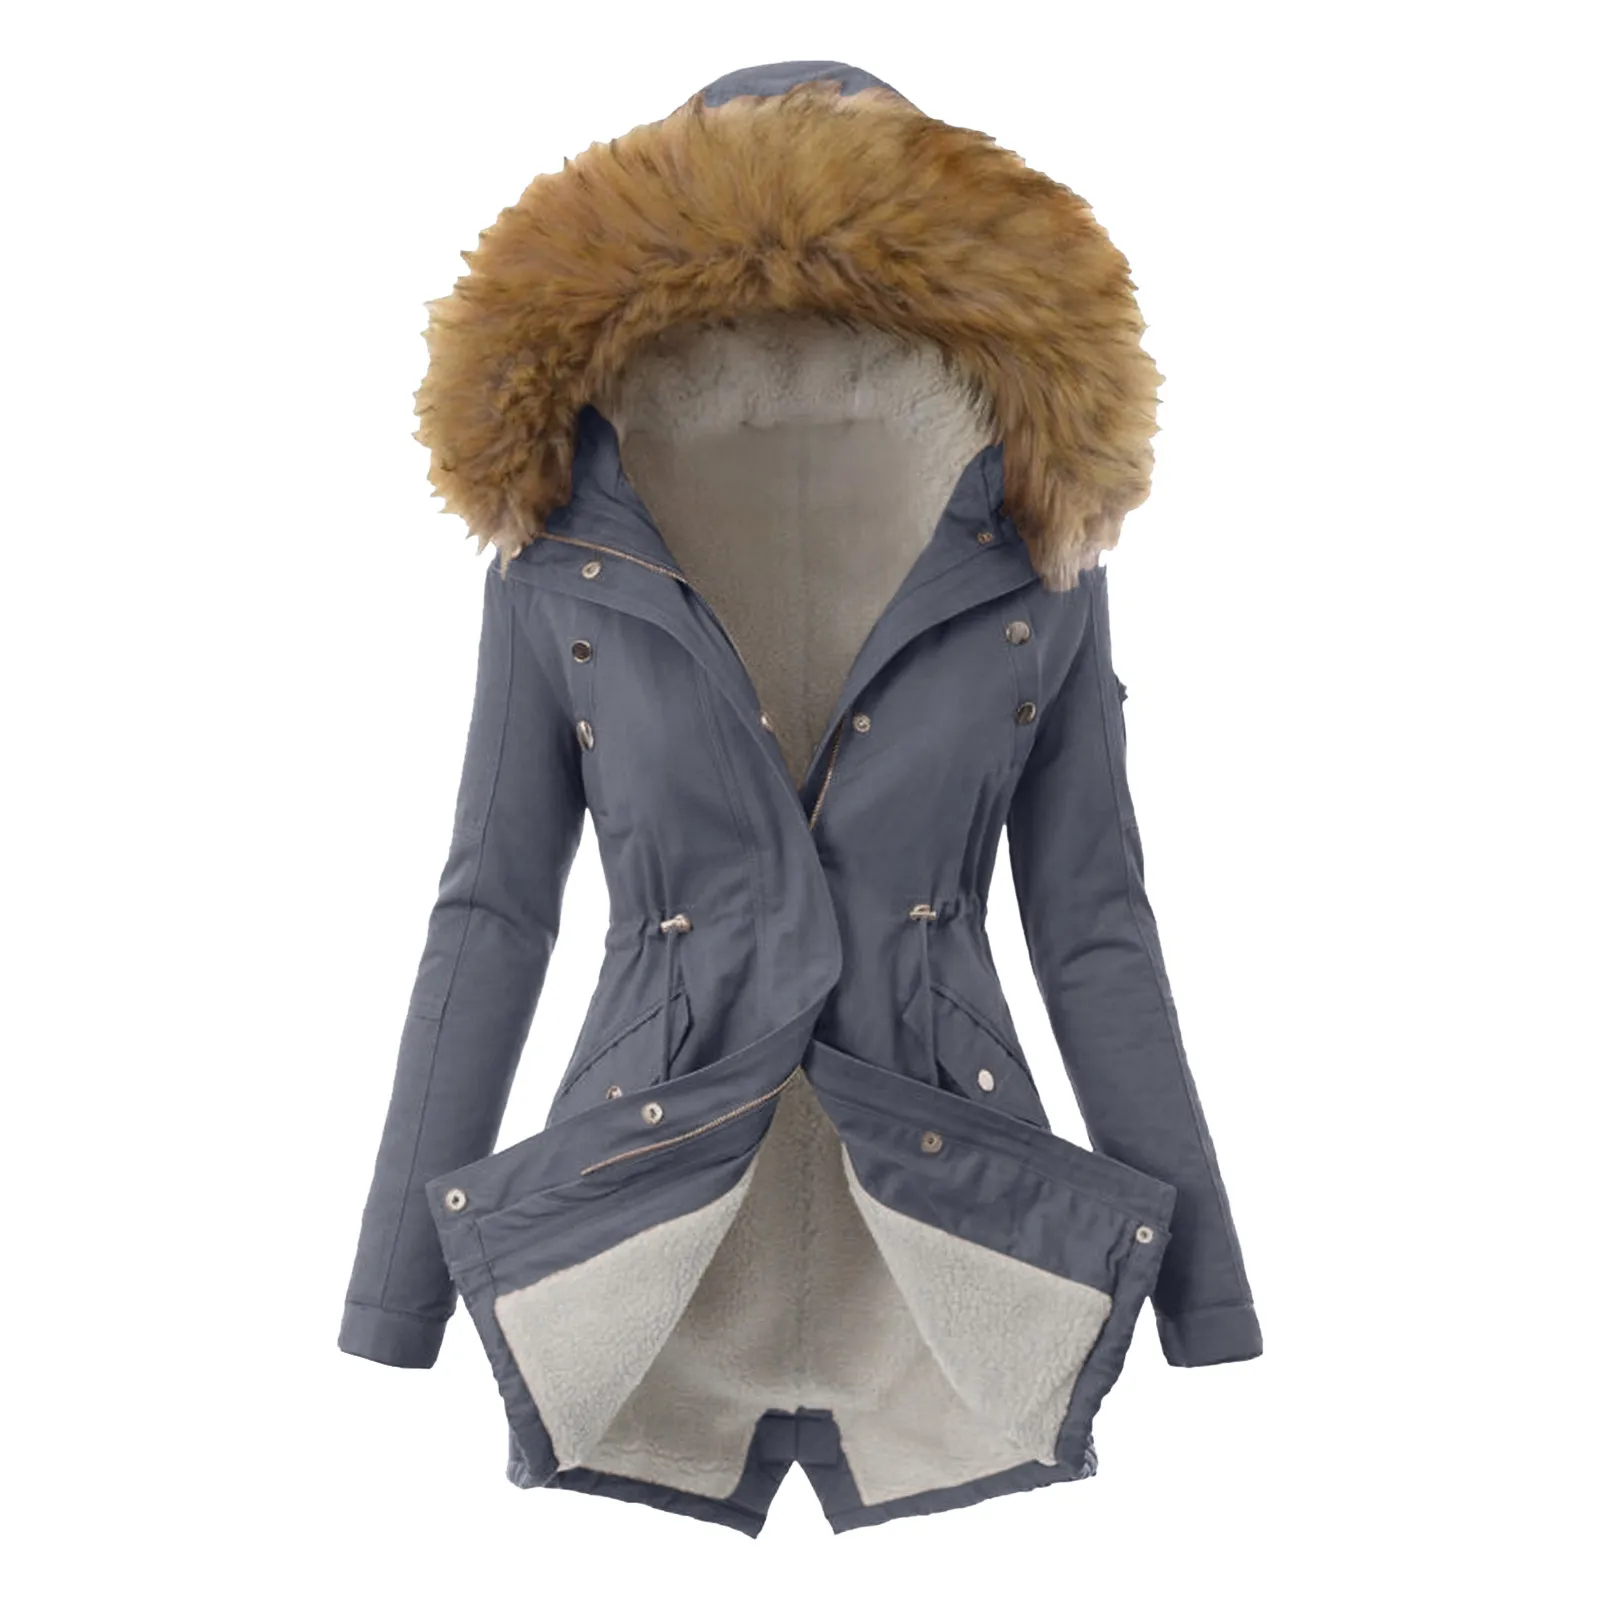 

Women Warm Coat Fashion New Streetwear Jacket Outwear Fur' Lined Trench Winter Hooded Thick Keep warm Overcoat chaqueta mujer